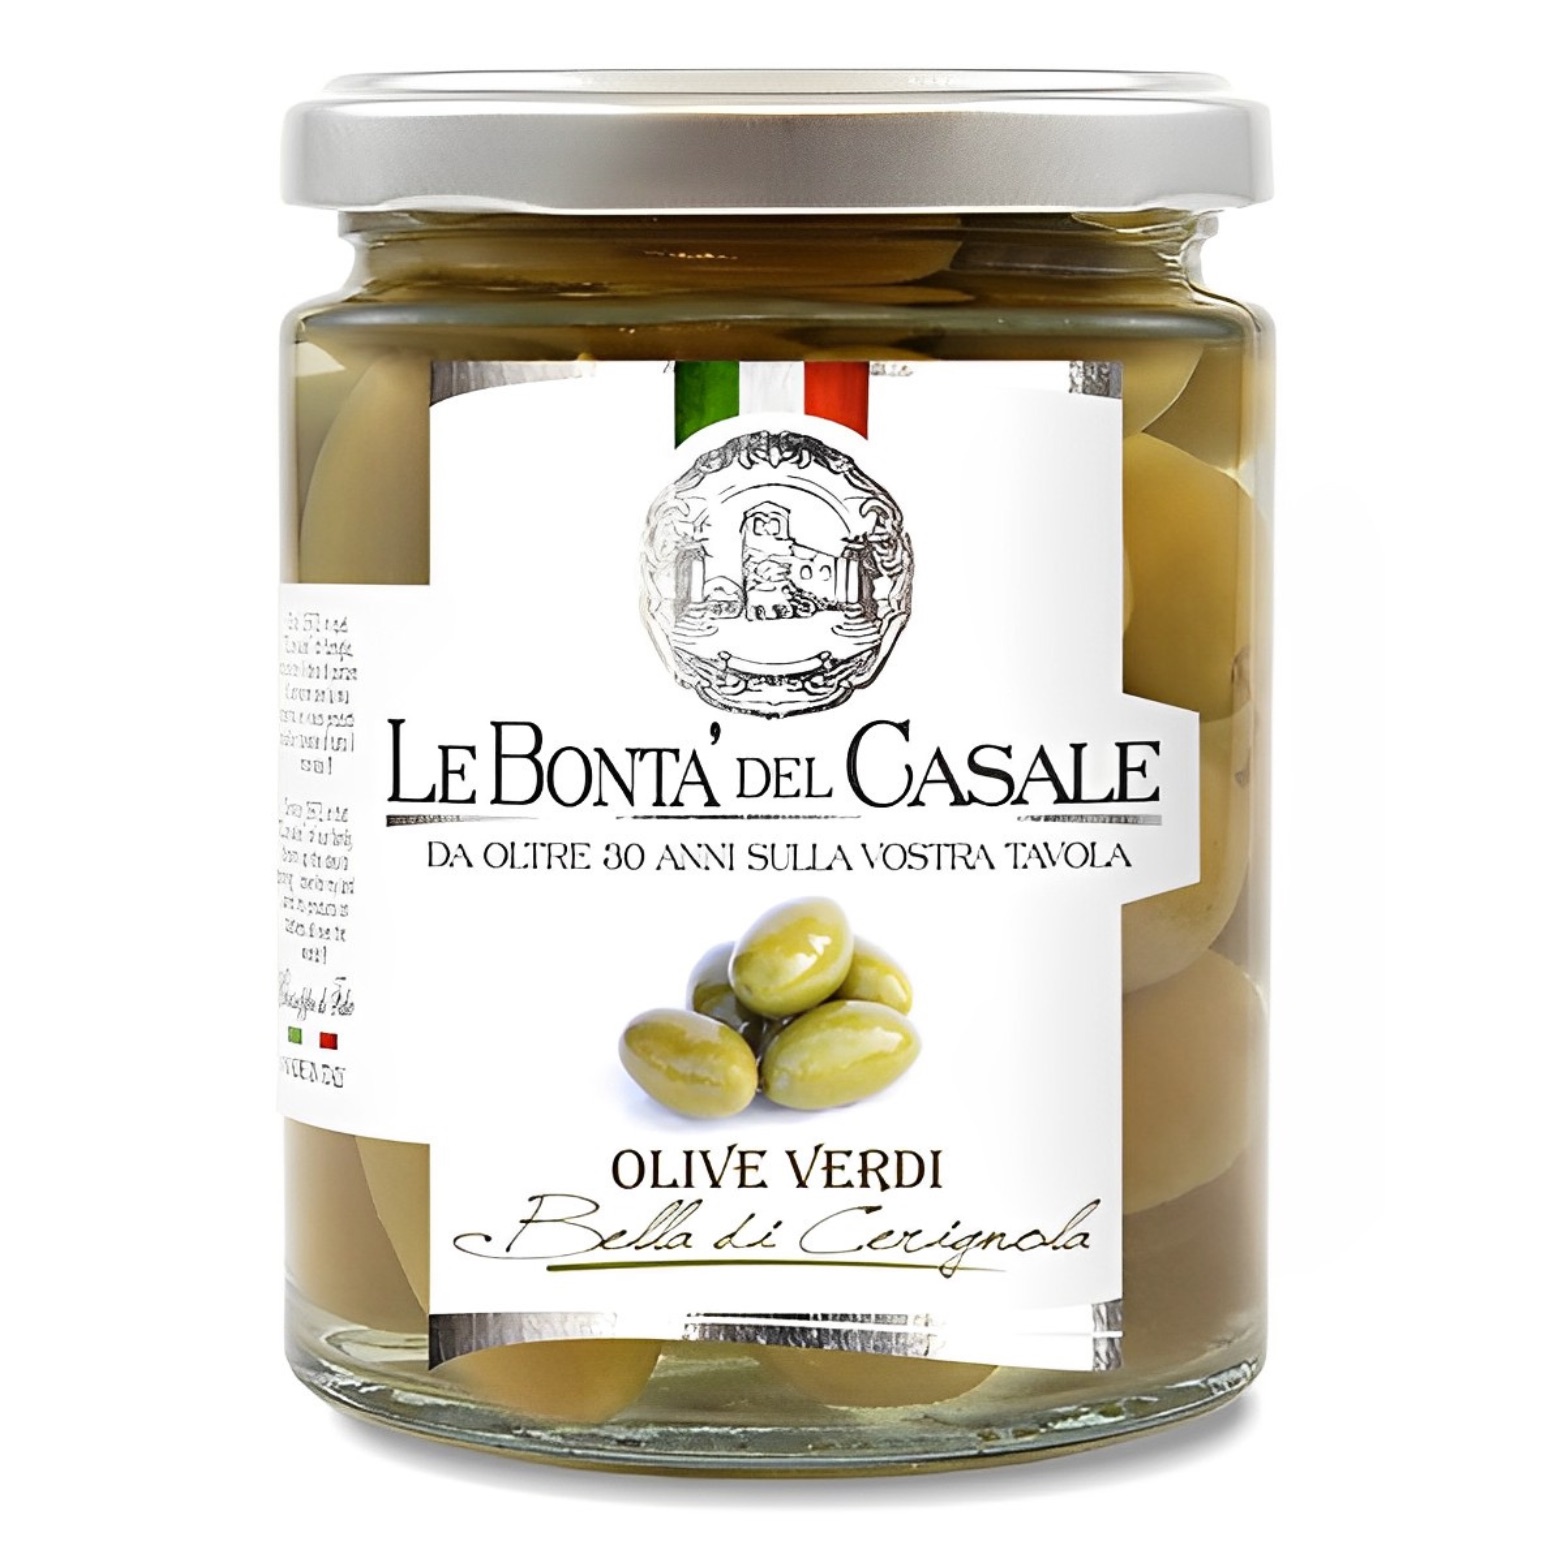 Riesen Oliven in Salzlake 314 ml – Hersteller Le Bonta del Casale